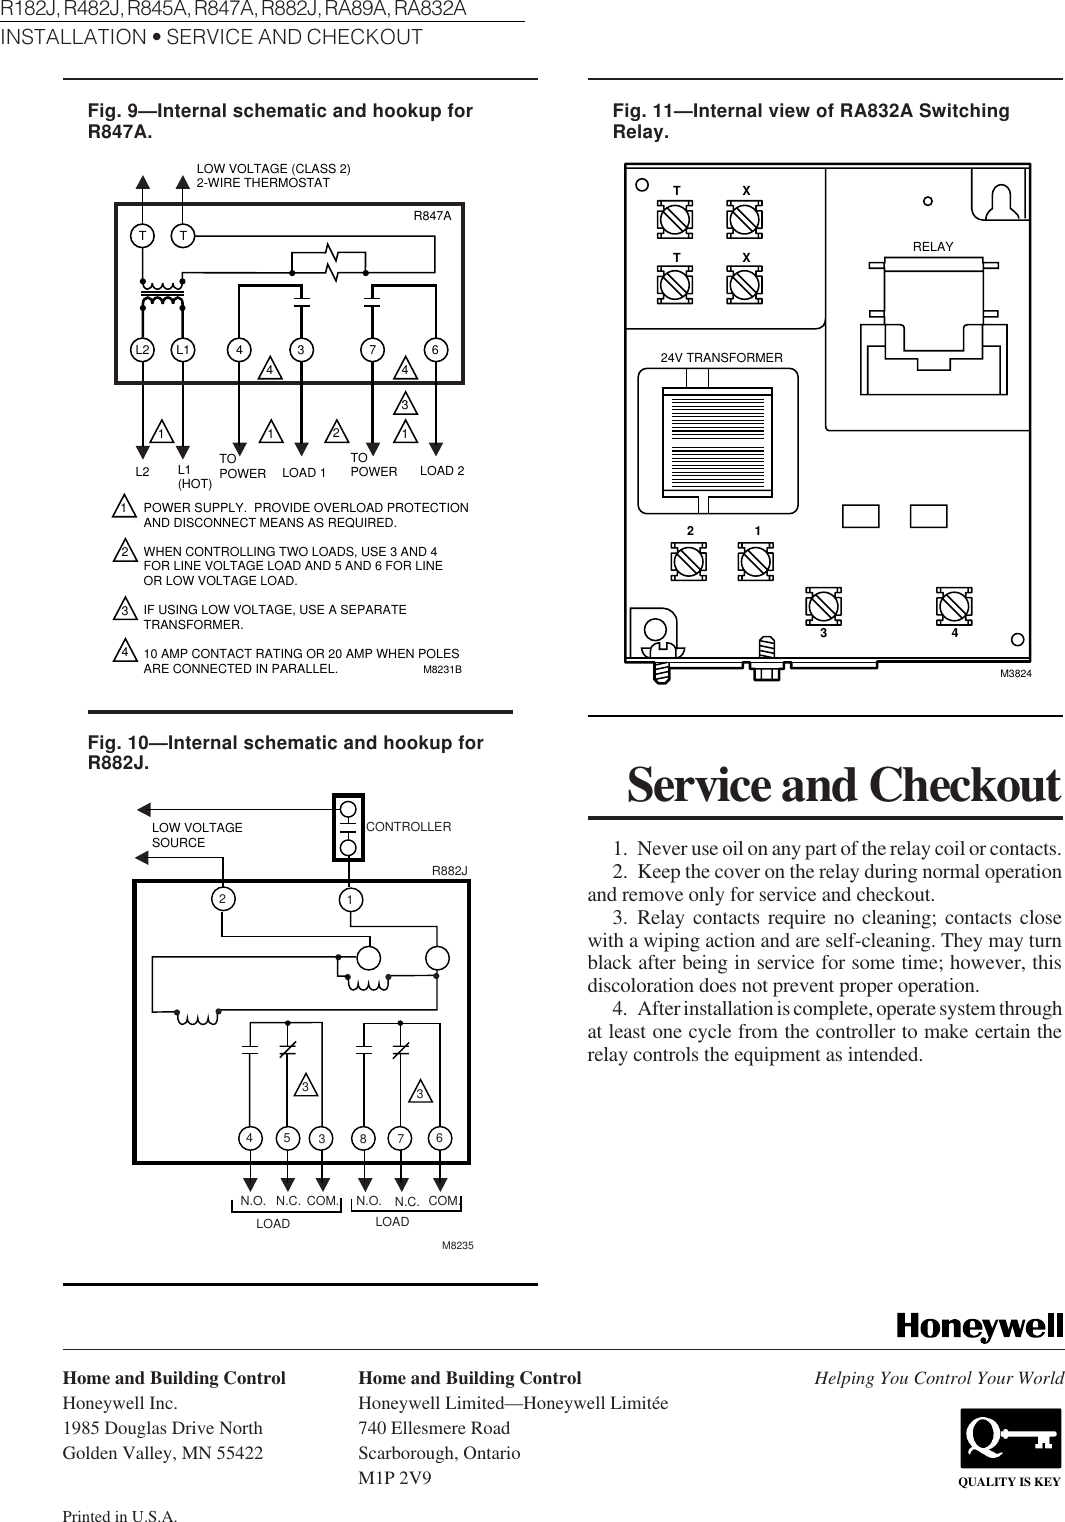 Page 6 of 6 - Honeywell Honeywell-Honeywell-Switch-R182J-Users-Manual- 60-2481 - R182J, R482J, R845A, R847A, R882J, RA89A, RA823A Switching Relays  Honeywell-honeywell-switch-r182j-users-manual